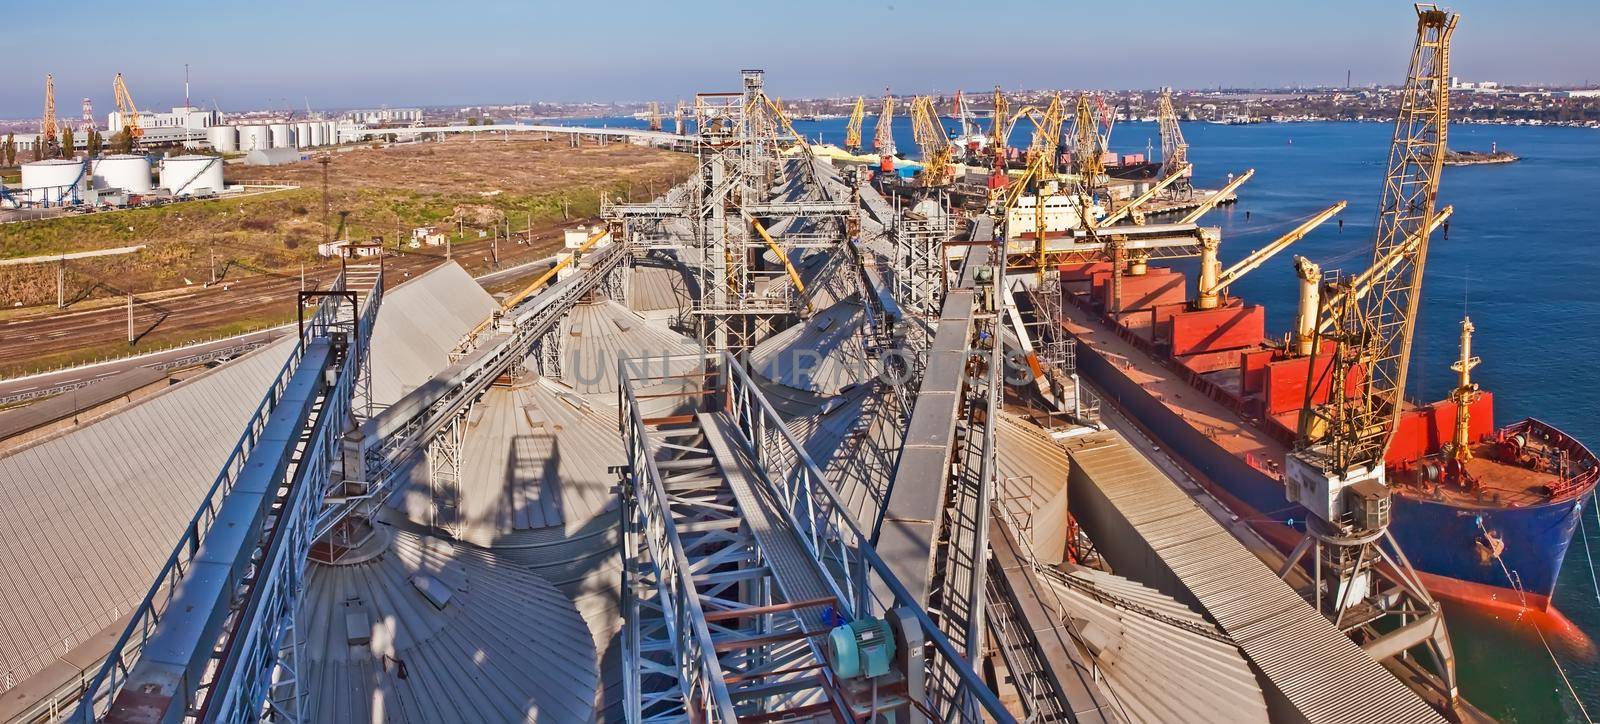 Loading grain into holds of sea cargo vessel in seaport from grain storage. by sarymsakov